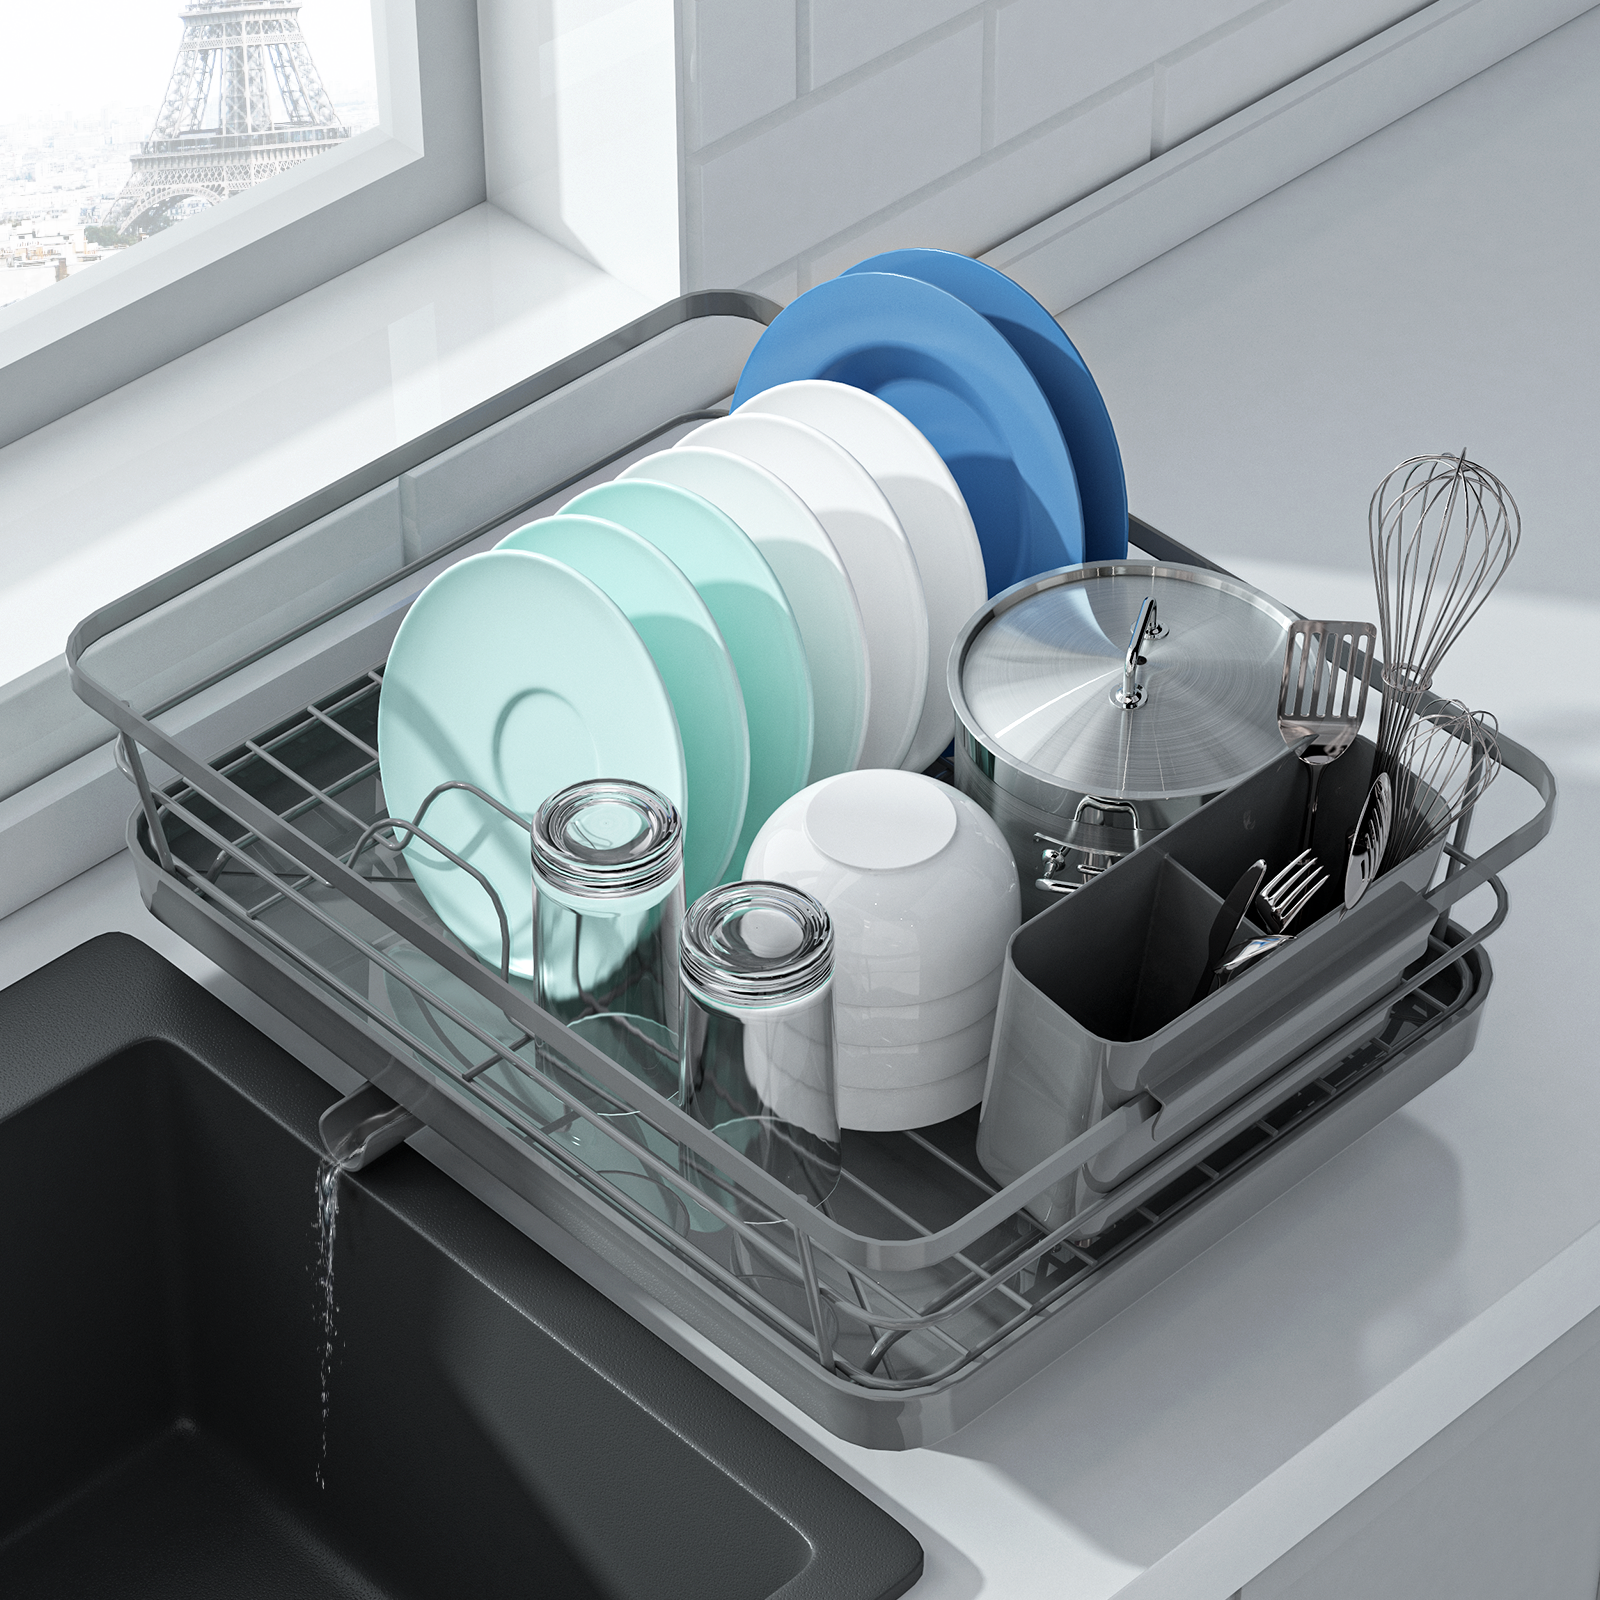 Kitsure Dish Drying Rack in Sink - Dual-Use Dish Rack for Countertops